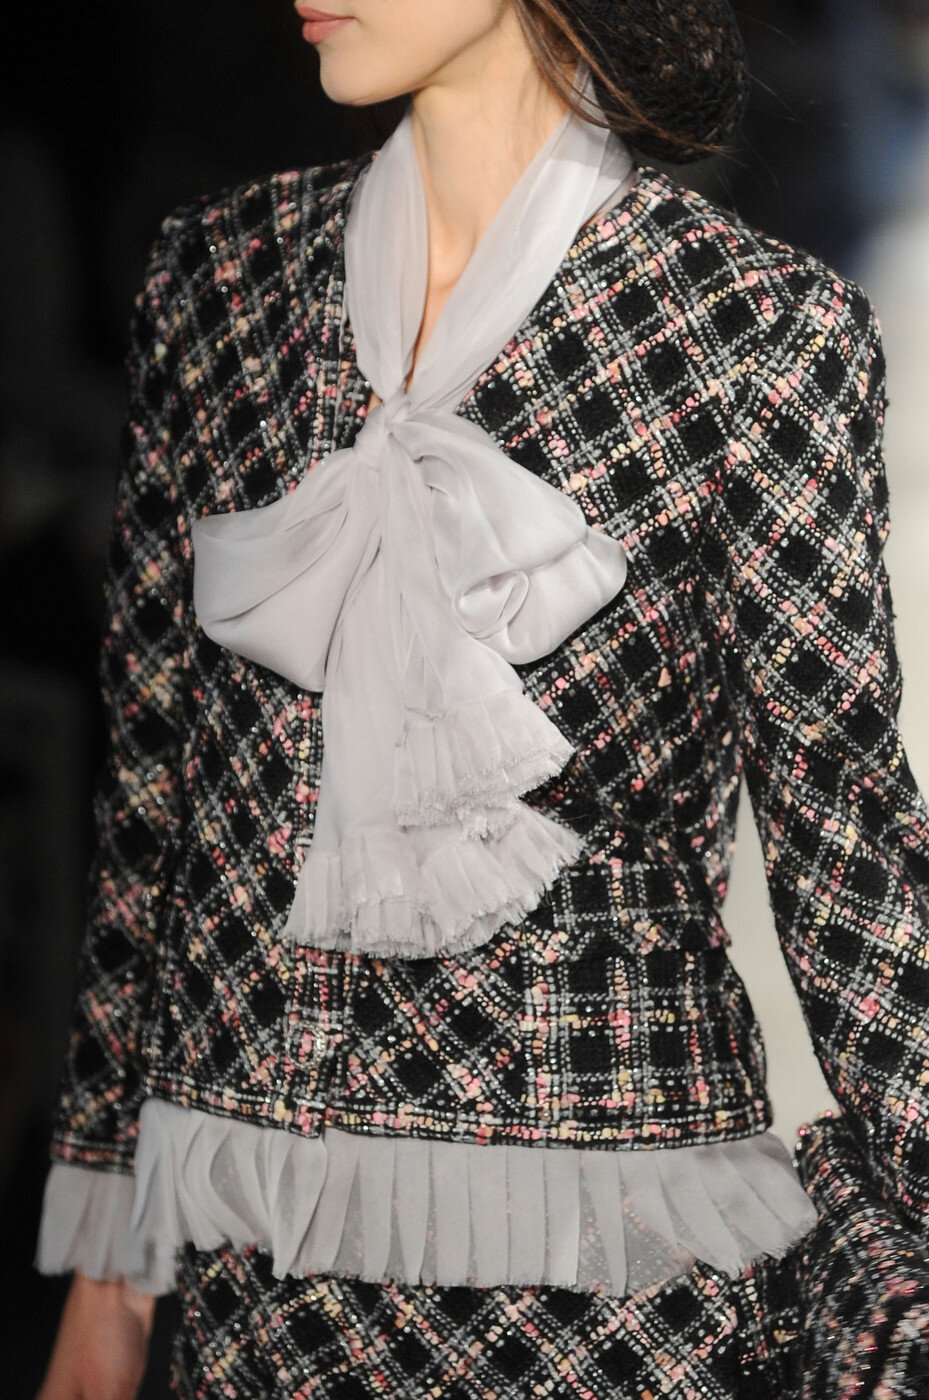 Chanel HC Tweed Jacket with Fringe Detail.jpg